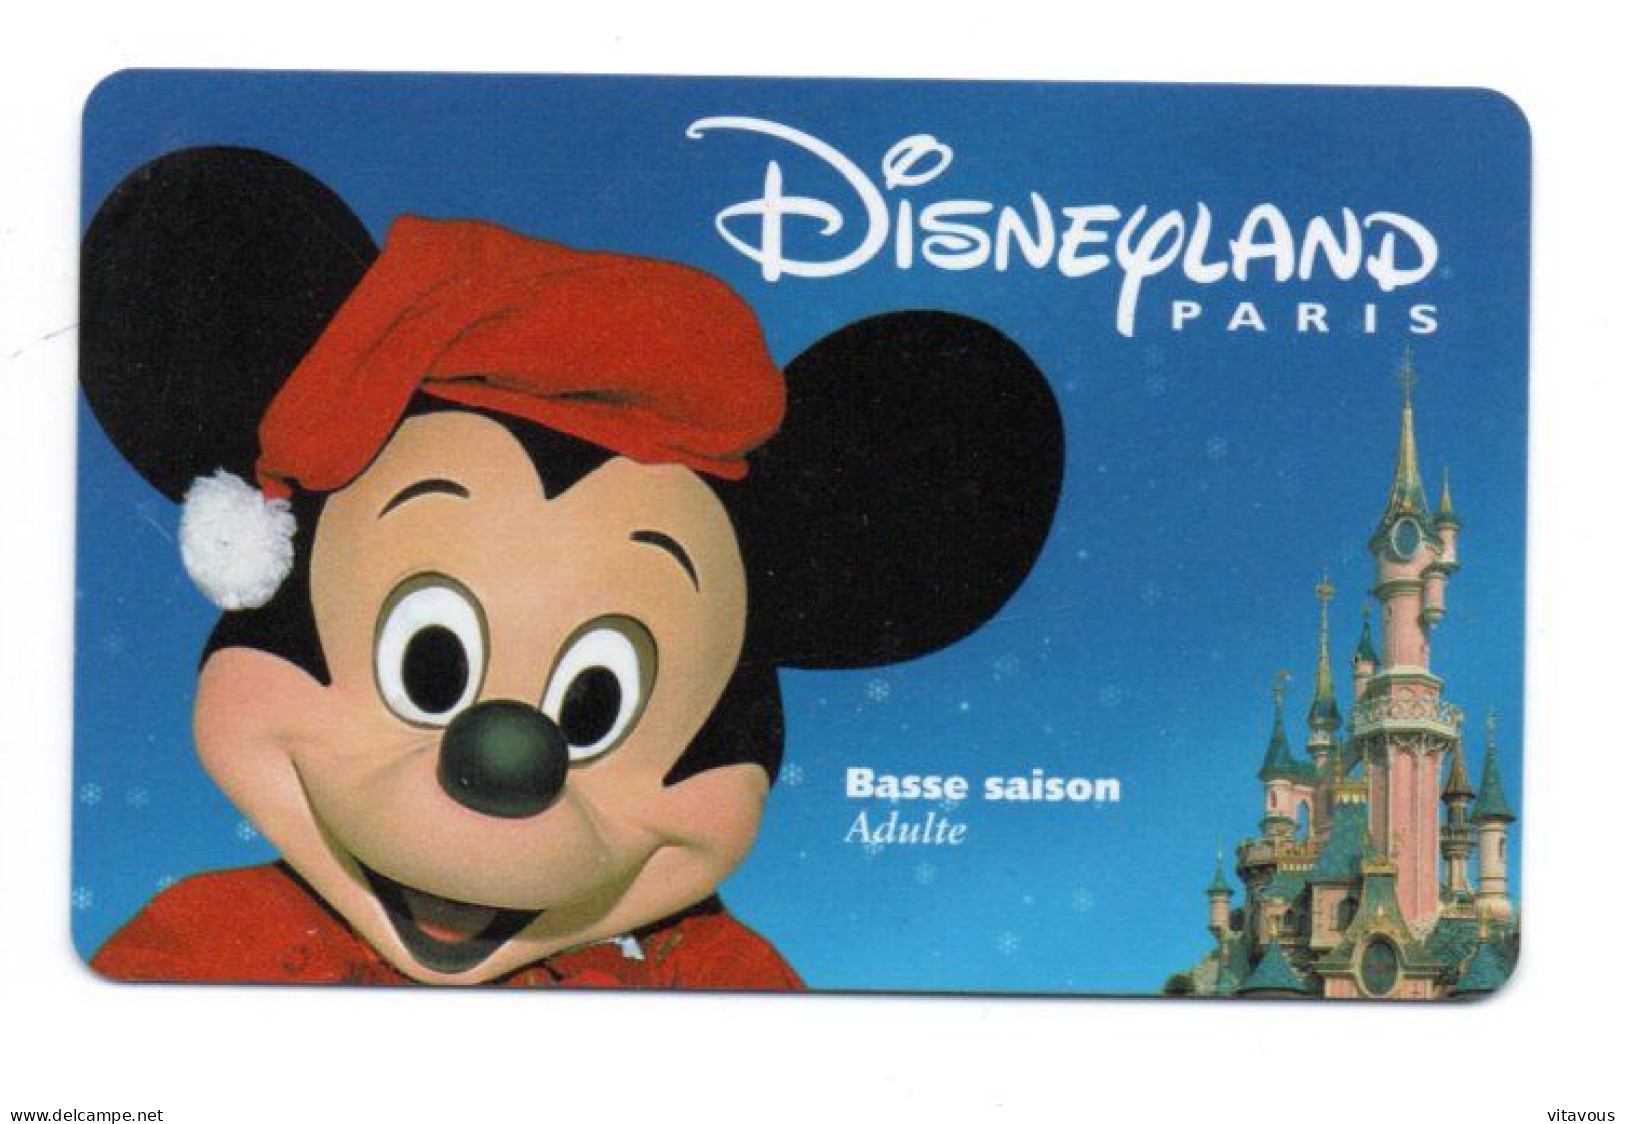 Passeport Disney Disneyland  PARIS France Card  (F 119) - Disney Passports